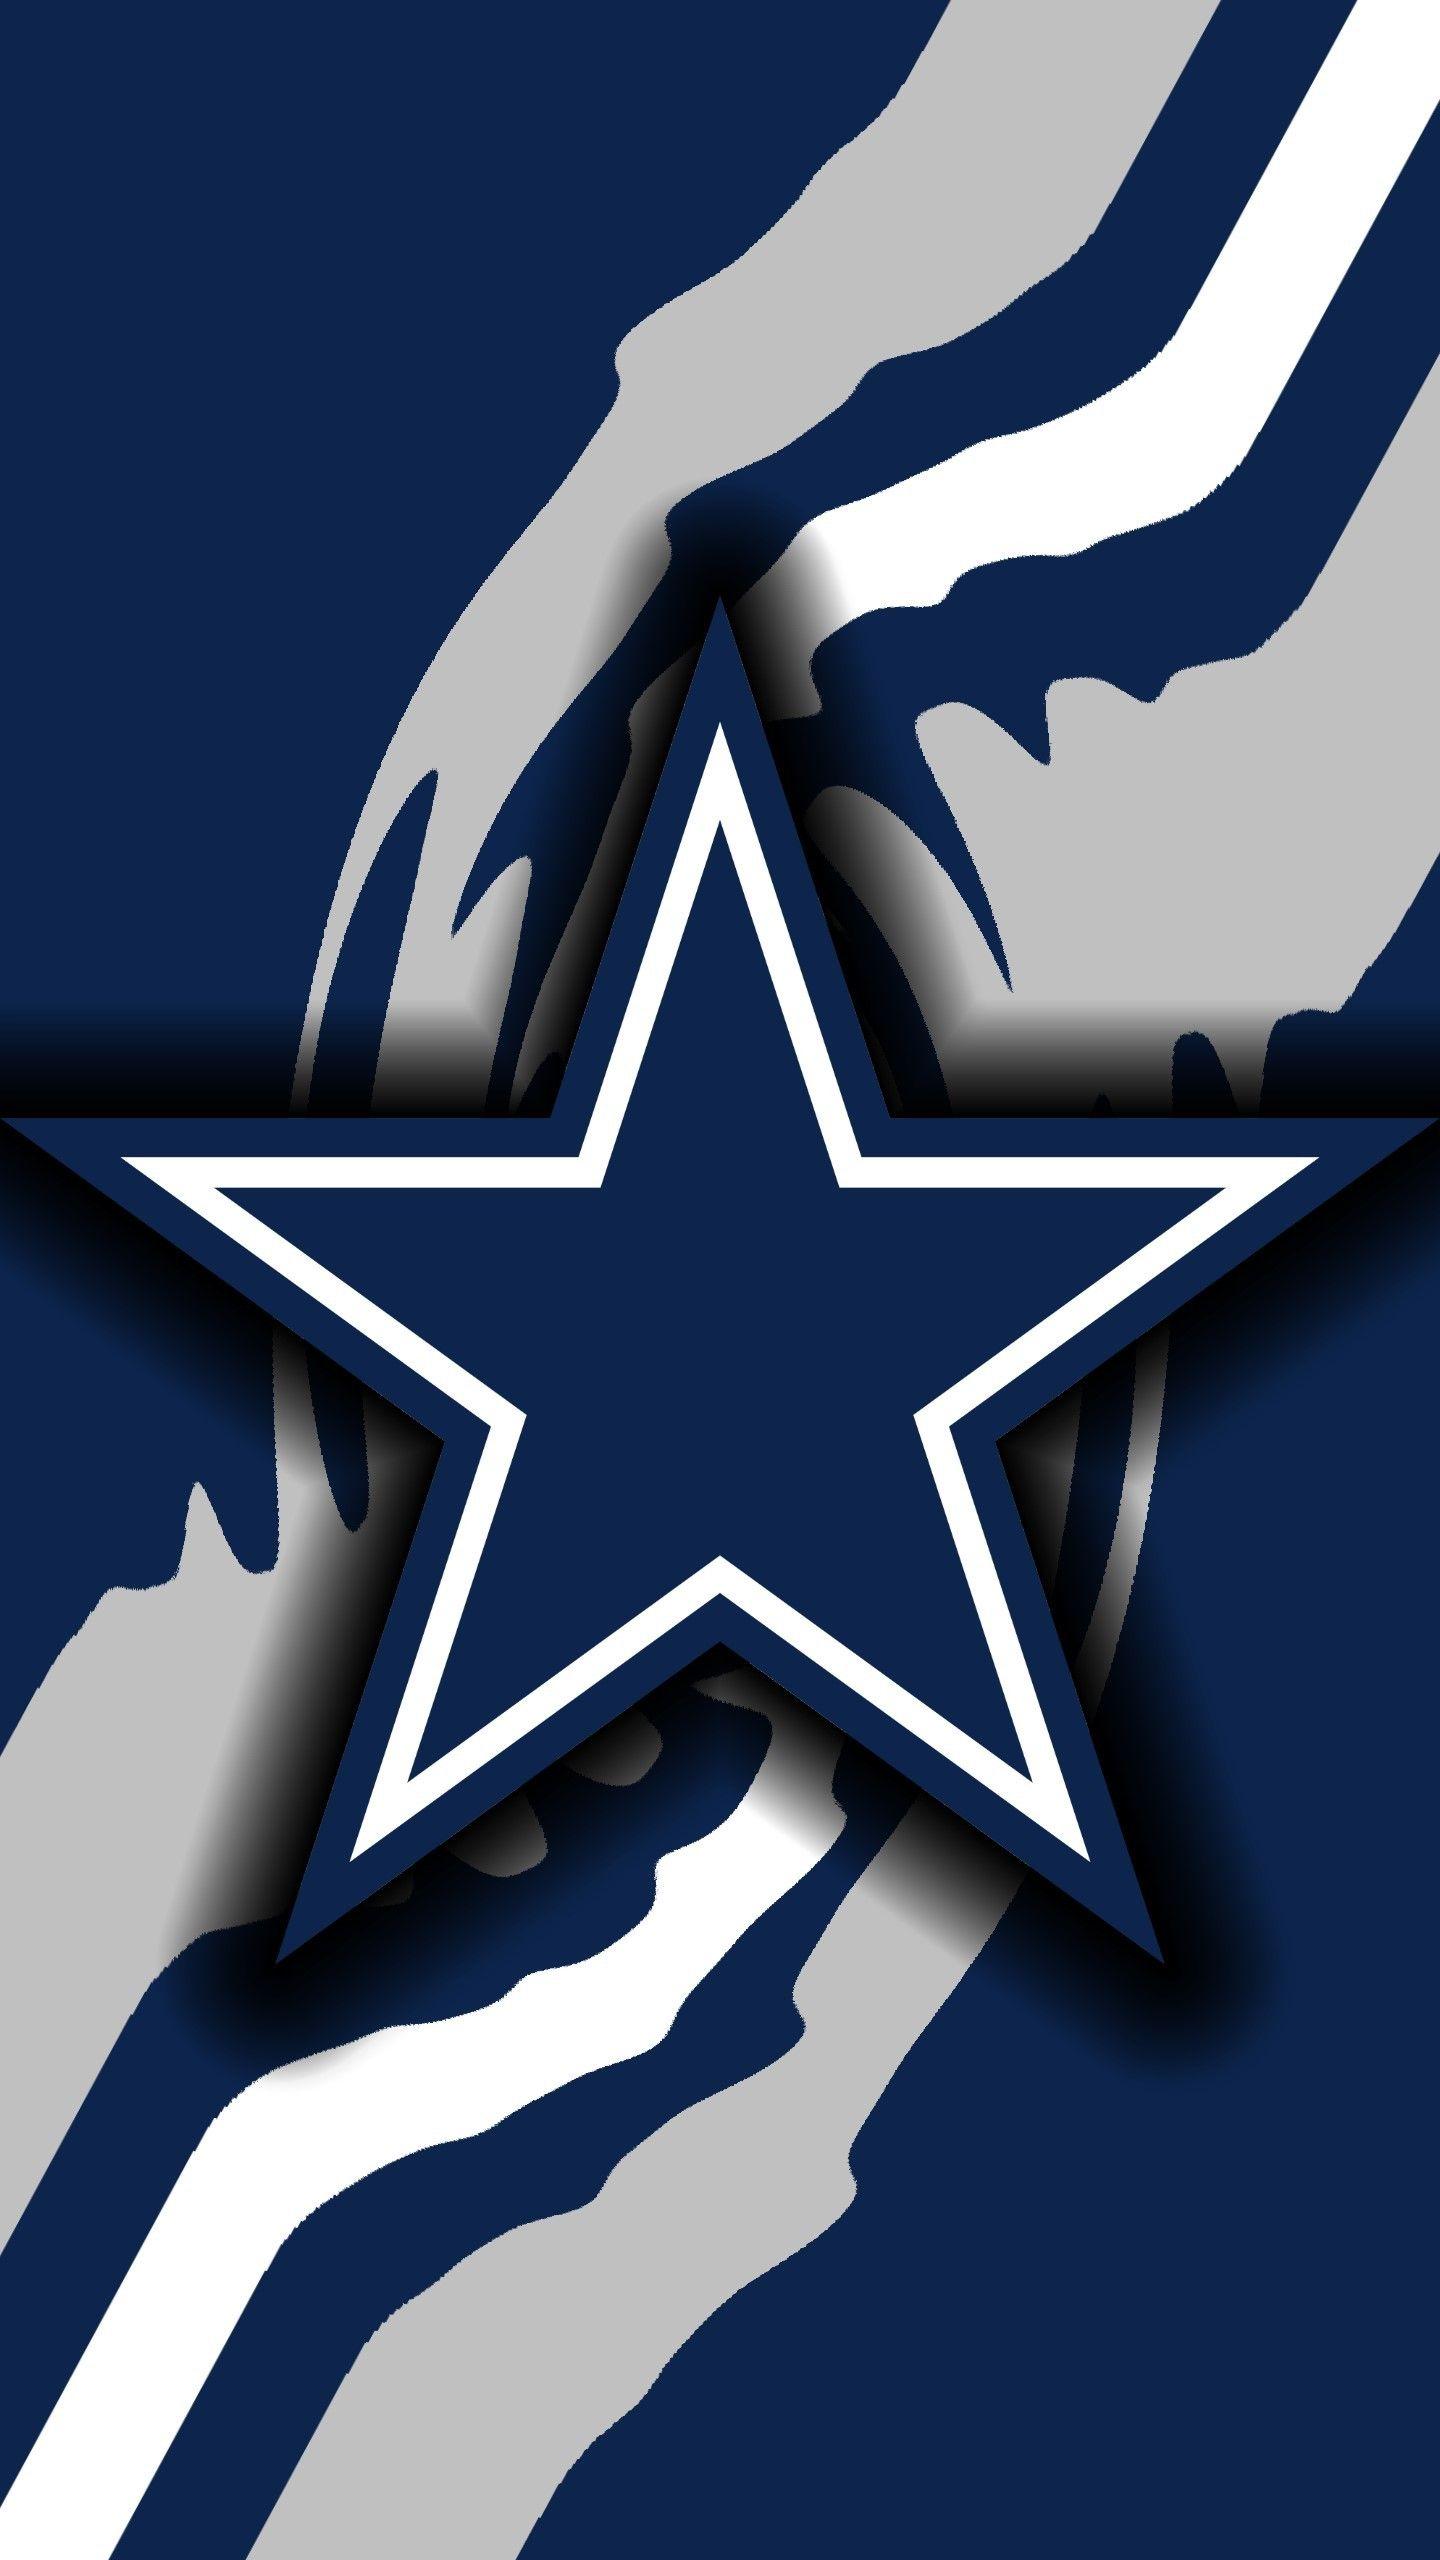 Dallas Cowboys Star Logo Wallpaper